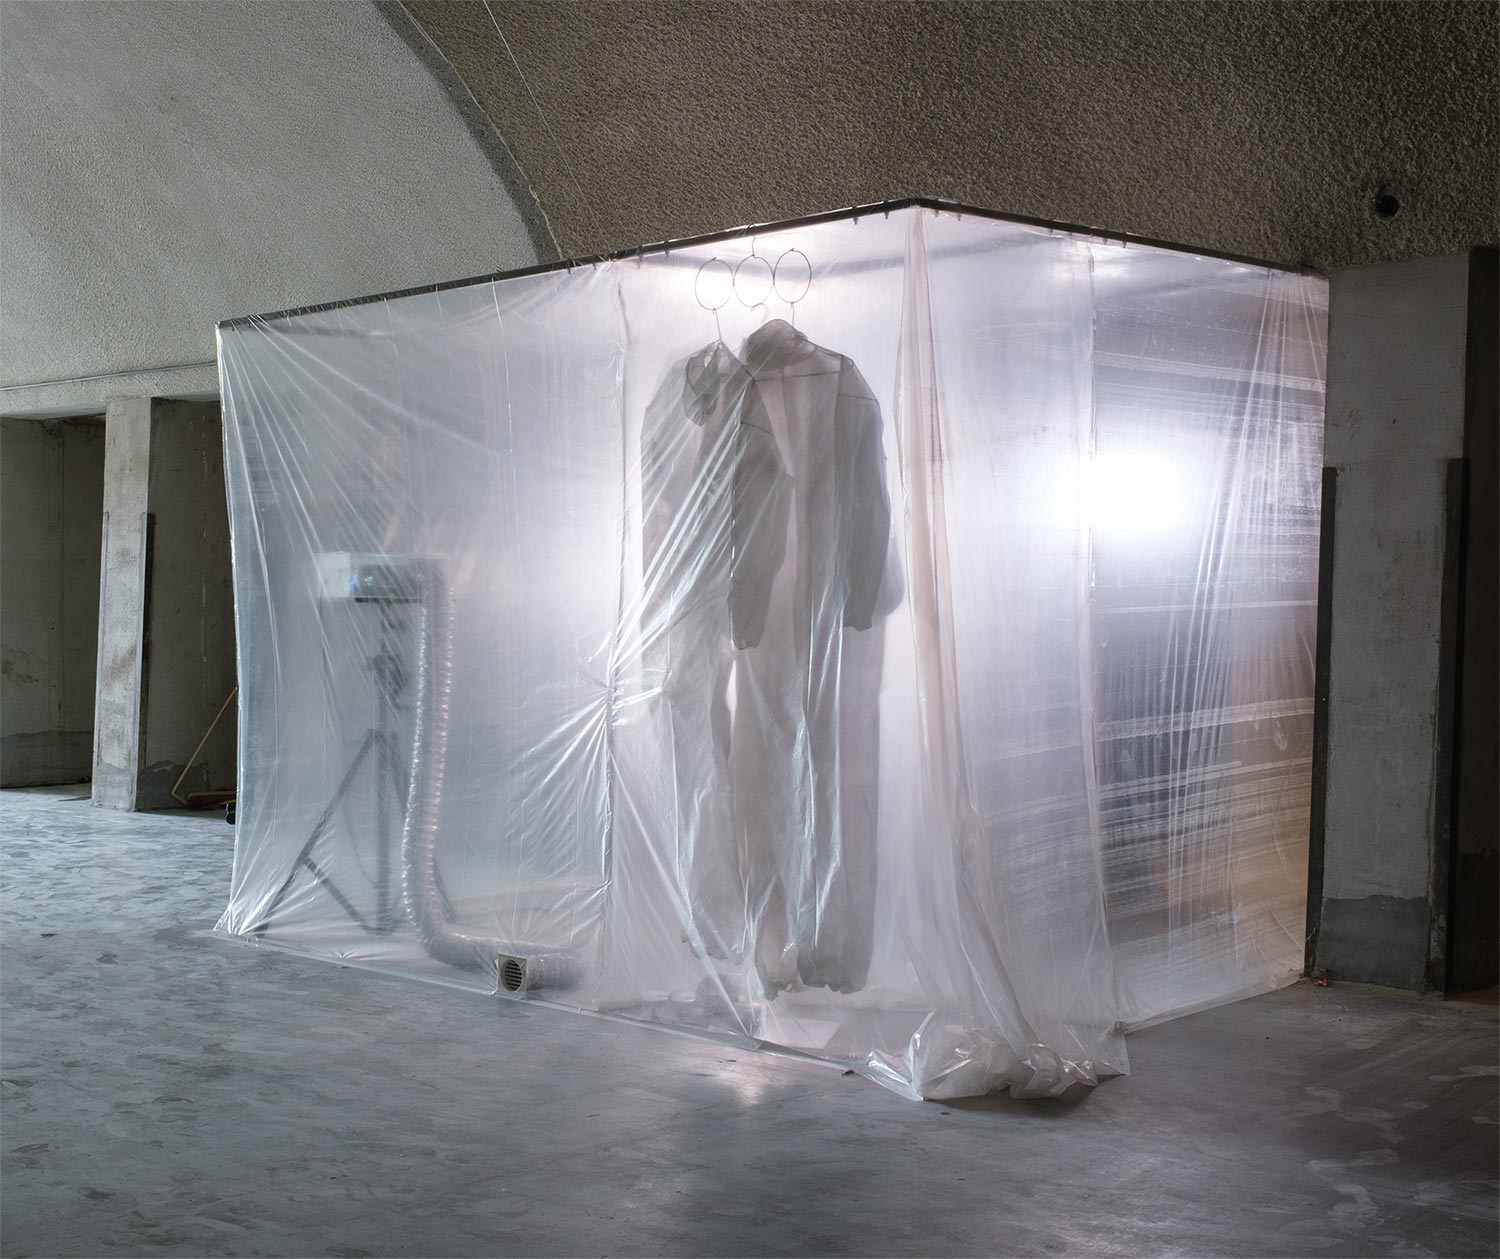 Chiaramentestudio, ‘The installation,’ Rotterdam (2021)